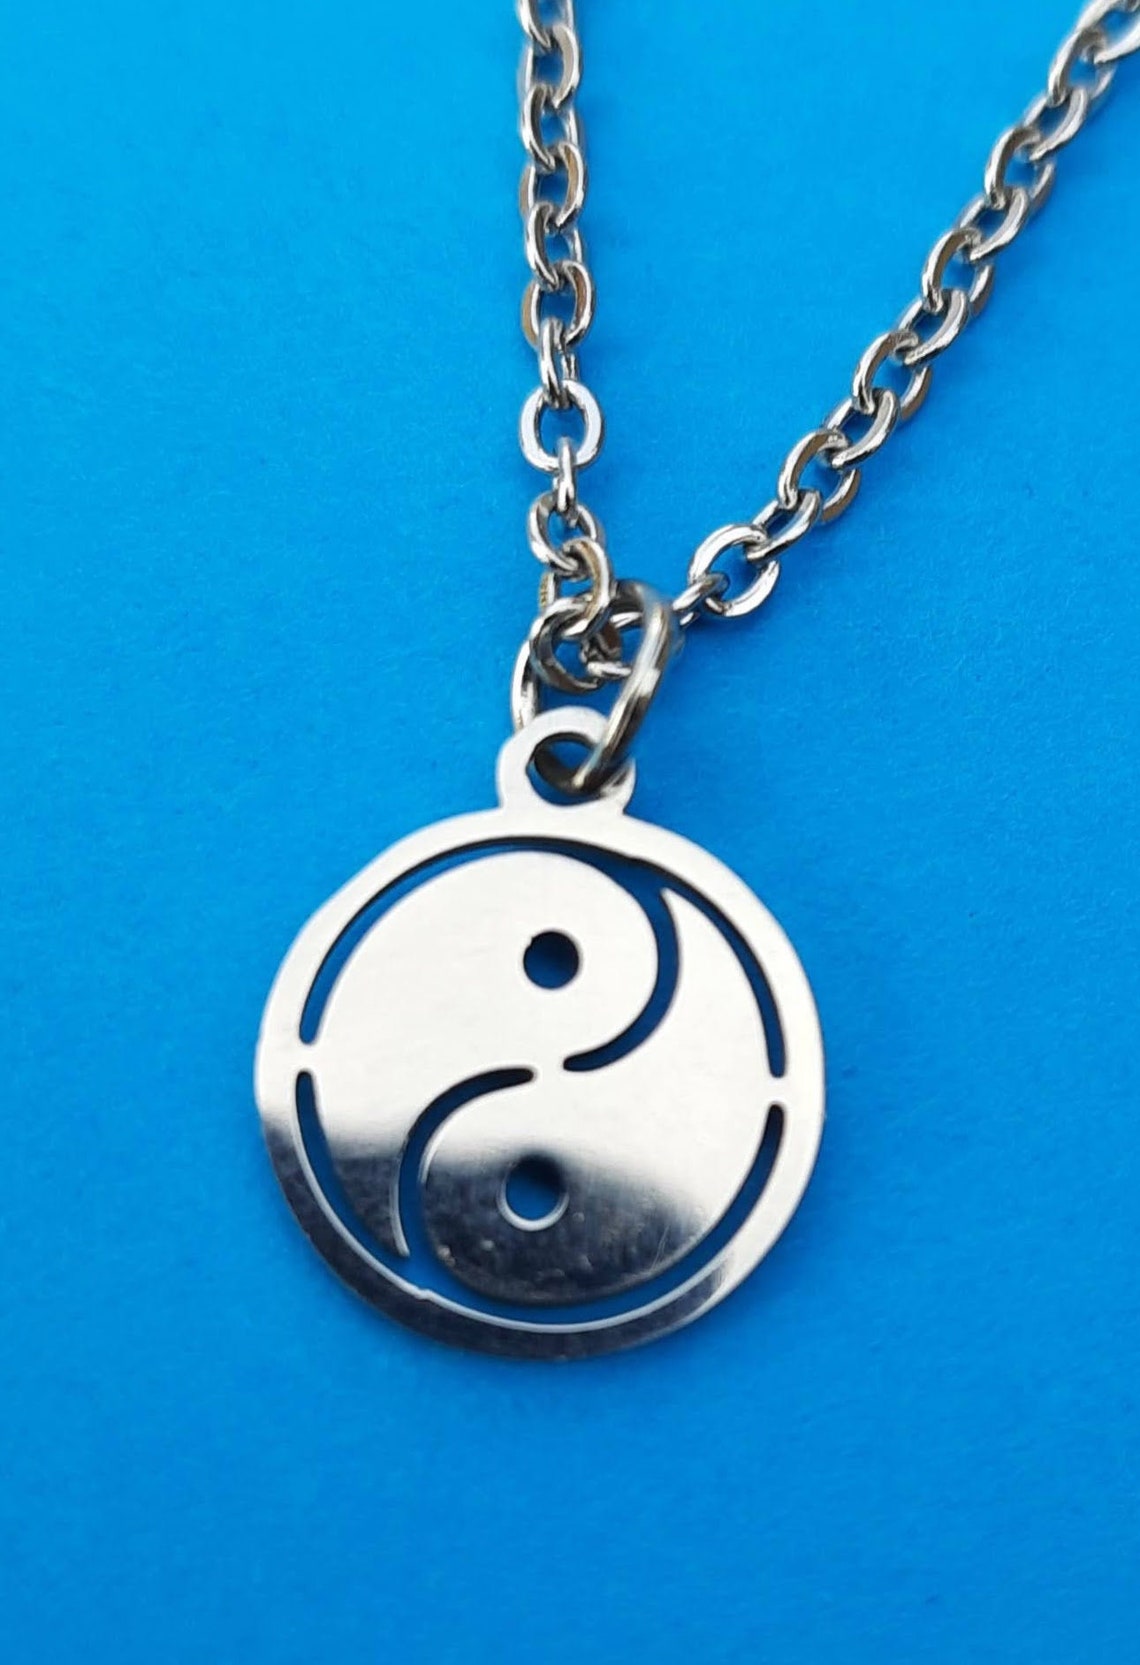 Yin yang necklace yin yang charm necklace | Etsy